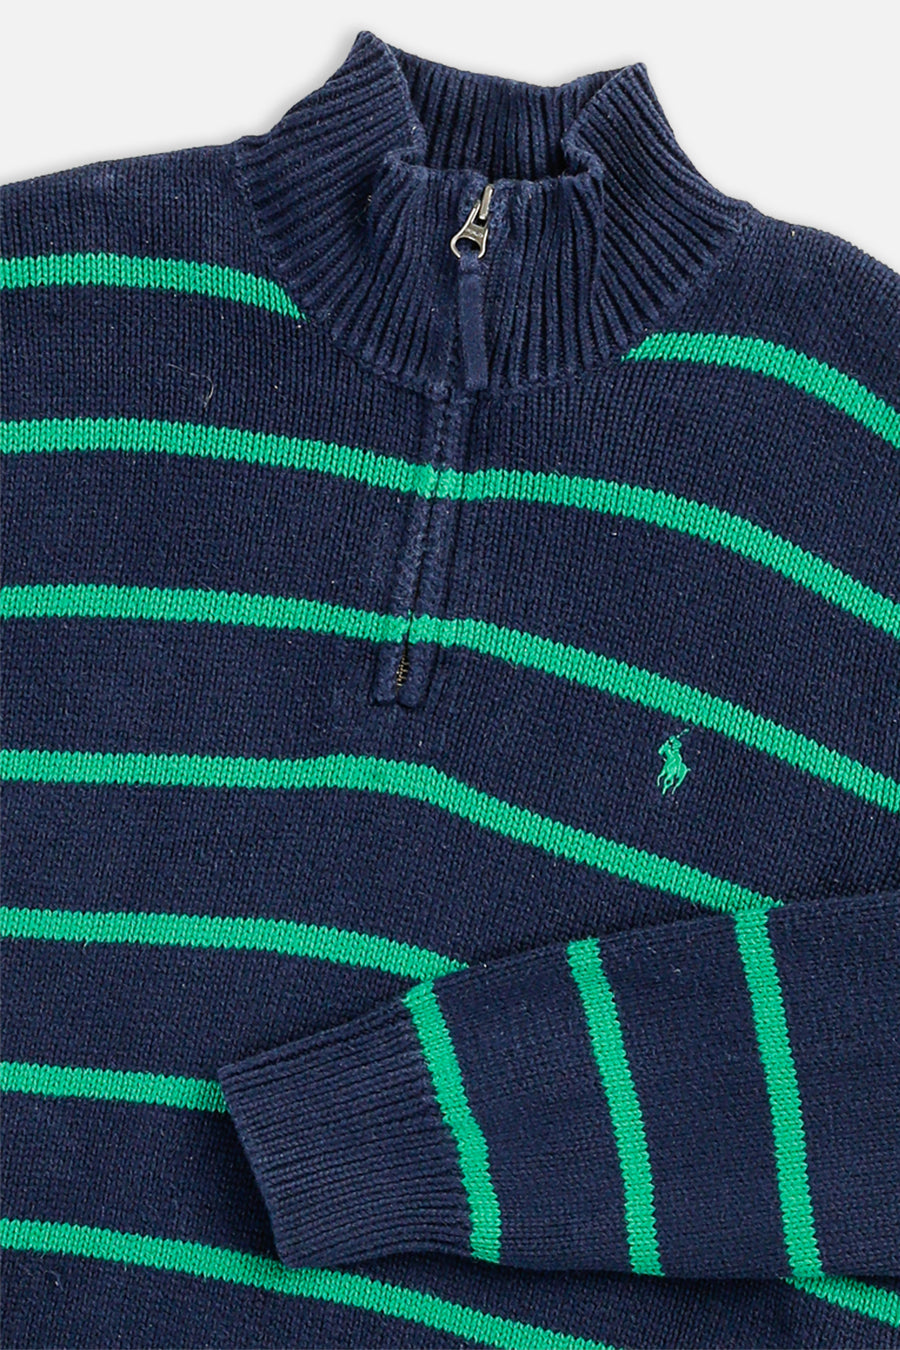 Vintage Knit Sweater - M